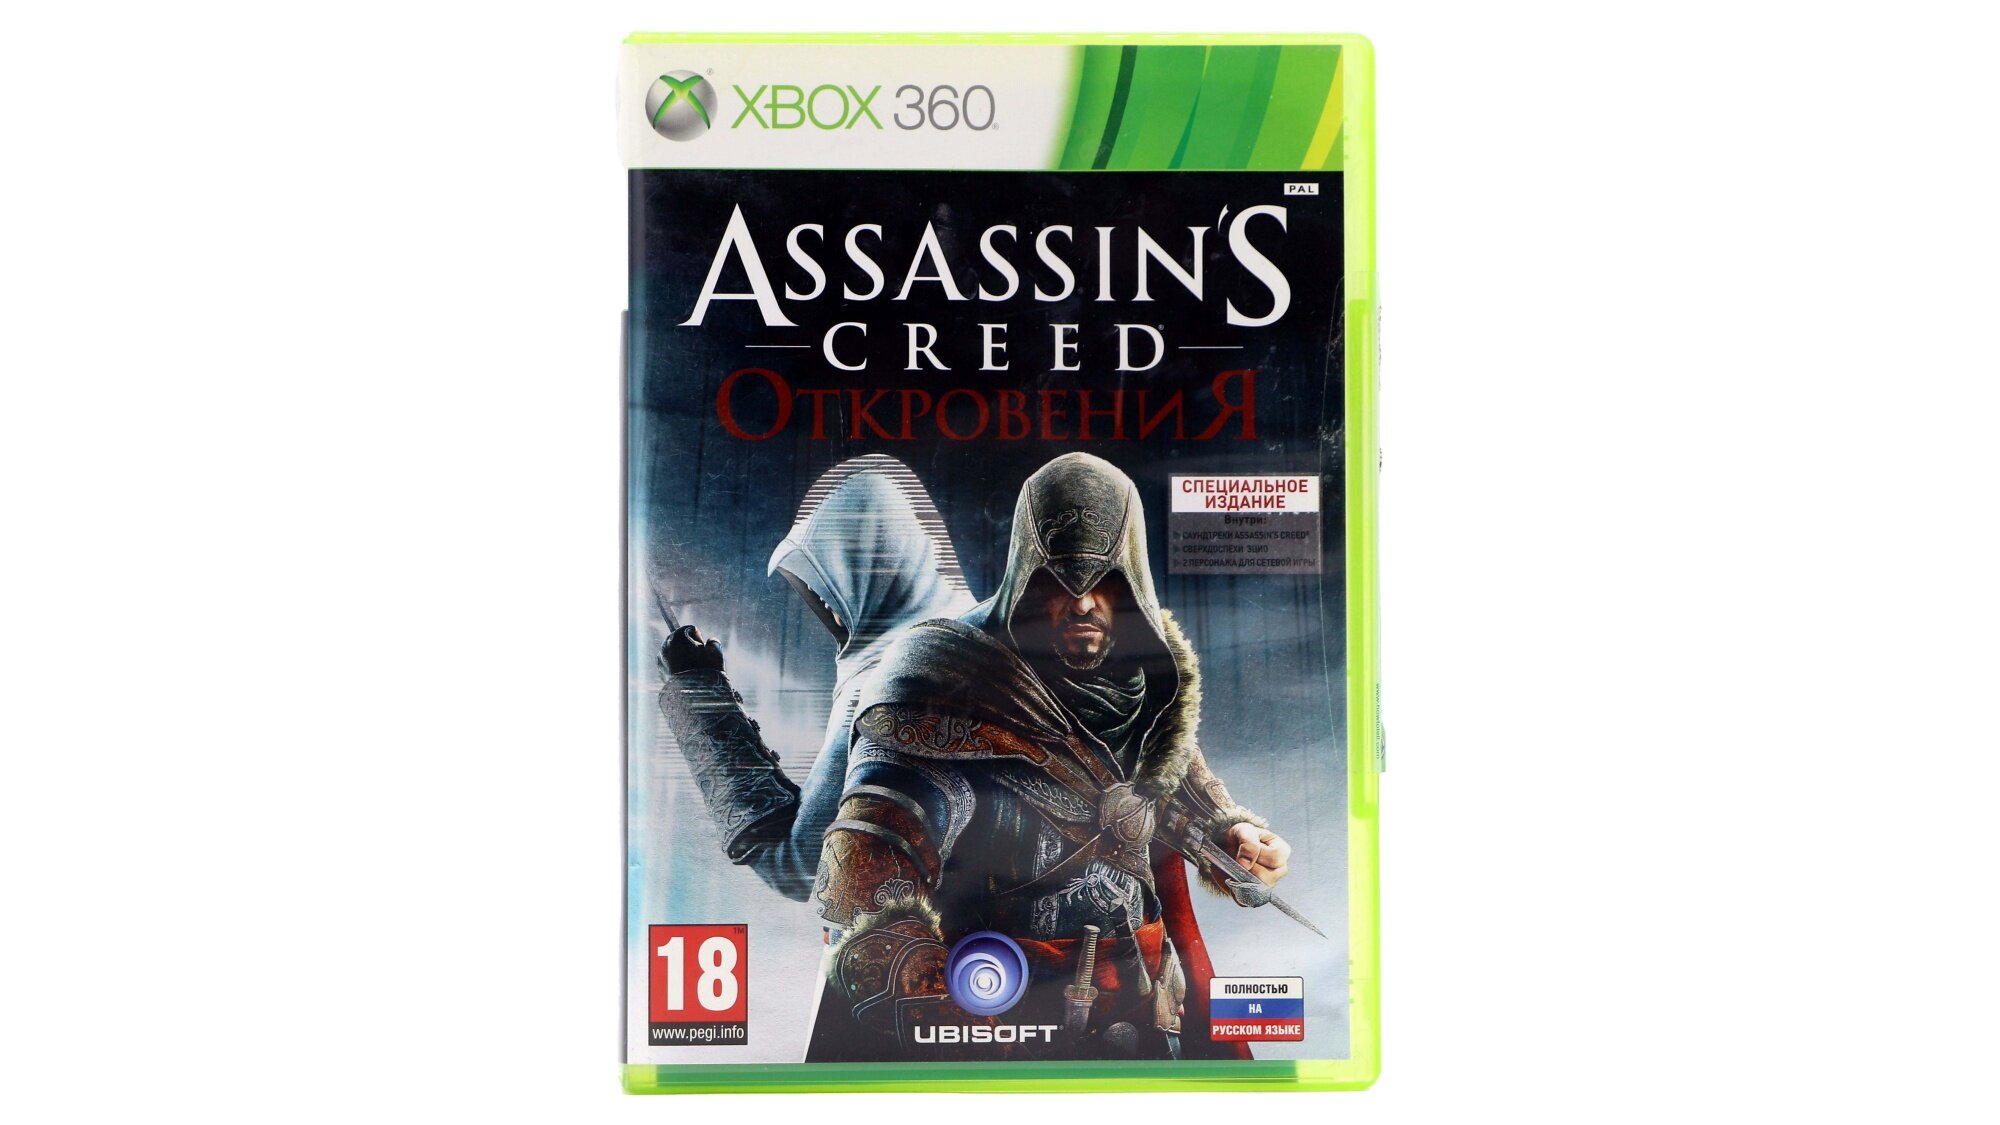 Assassin's Creed Откровения (Xbox 360, Русский язык)